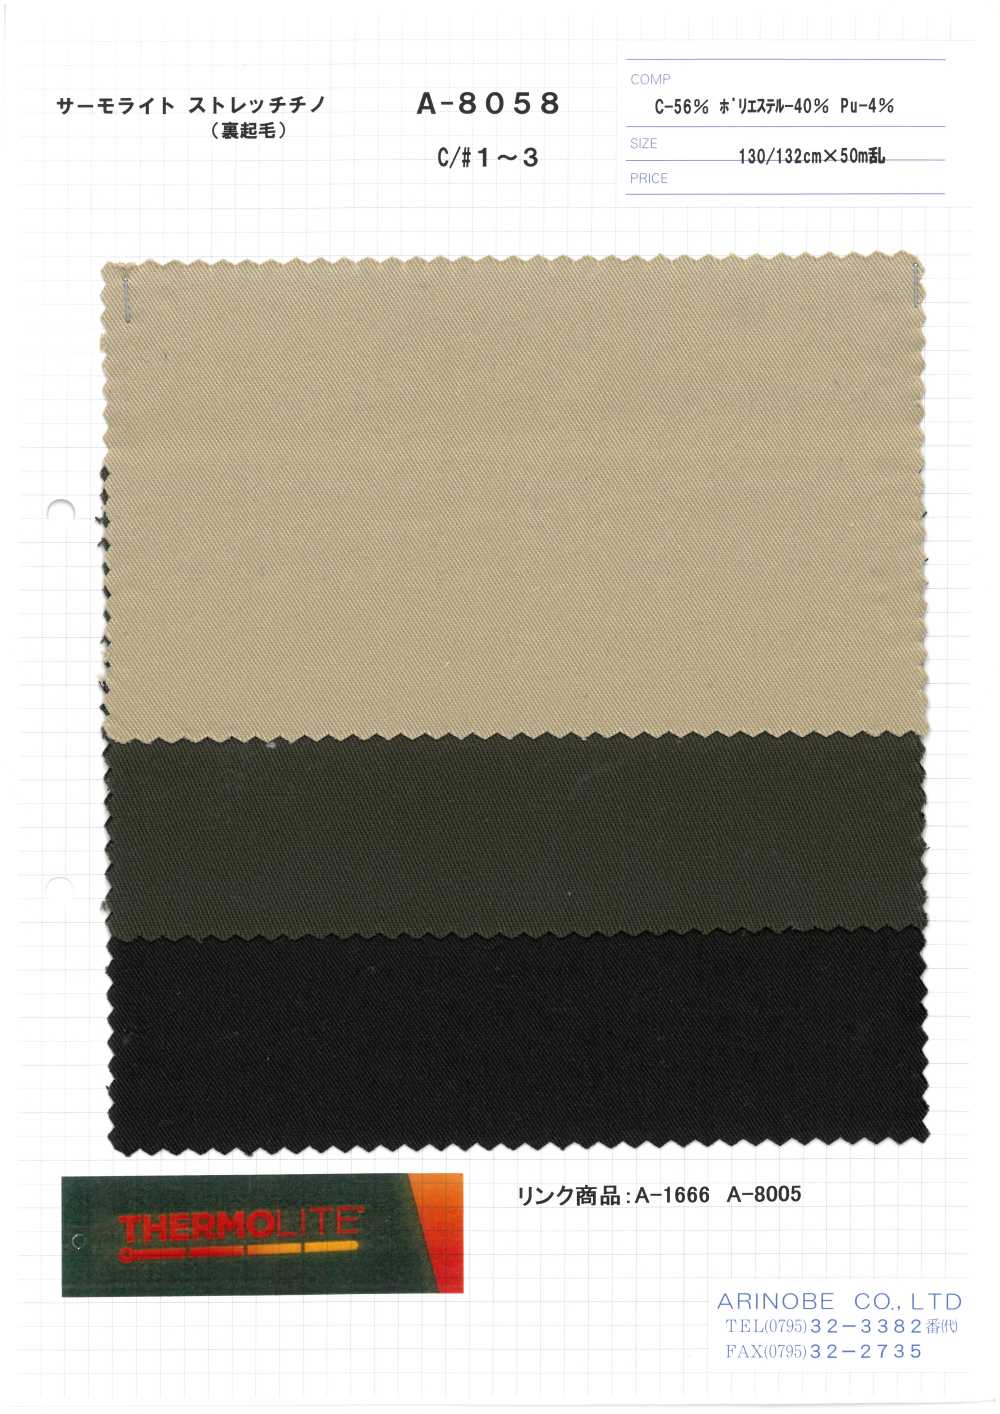 A-8058 Thermolite Stretch-Chino (Fuzzy-Futter)[Textilgewebe] ARINOBE CO., LTD.